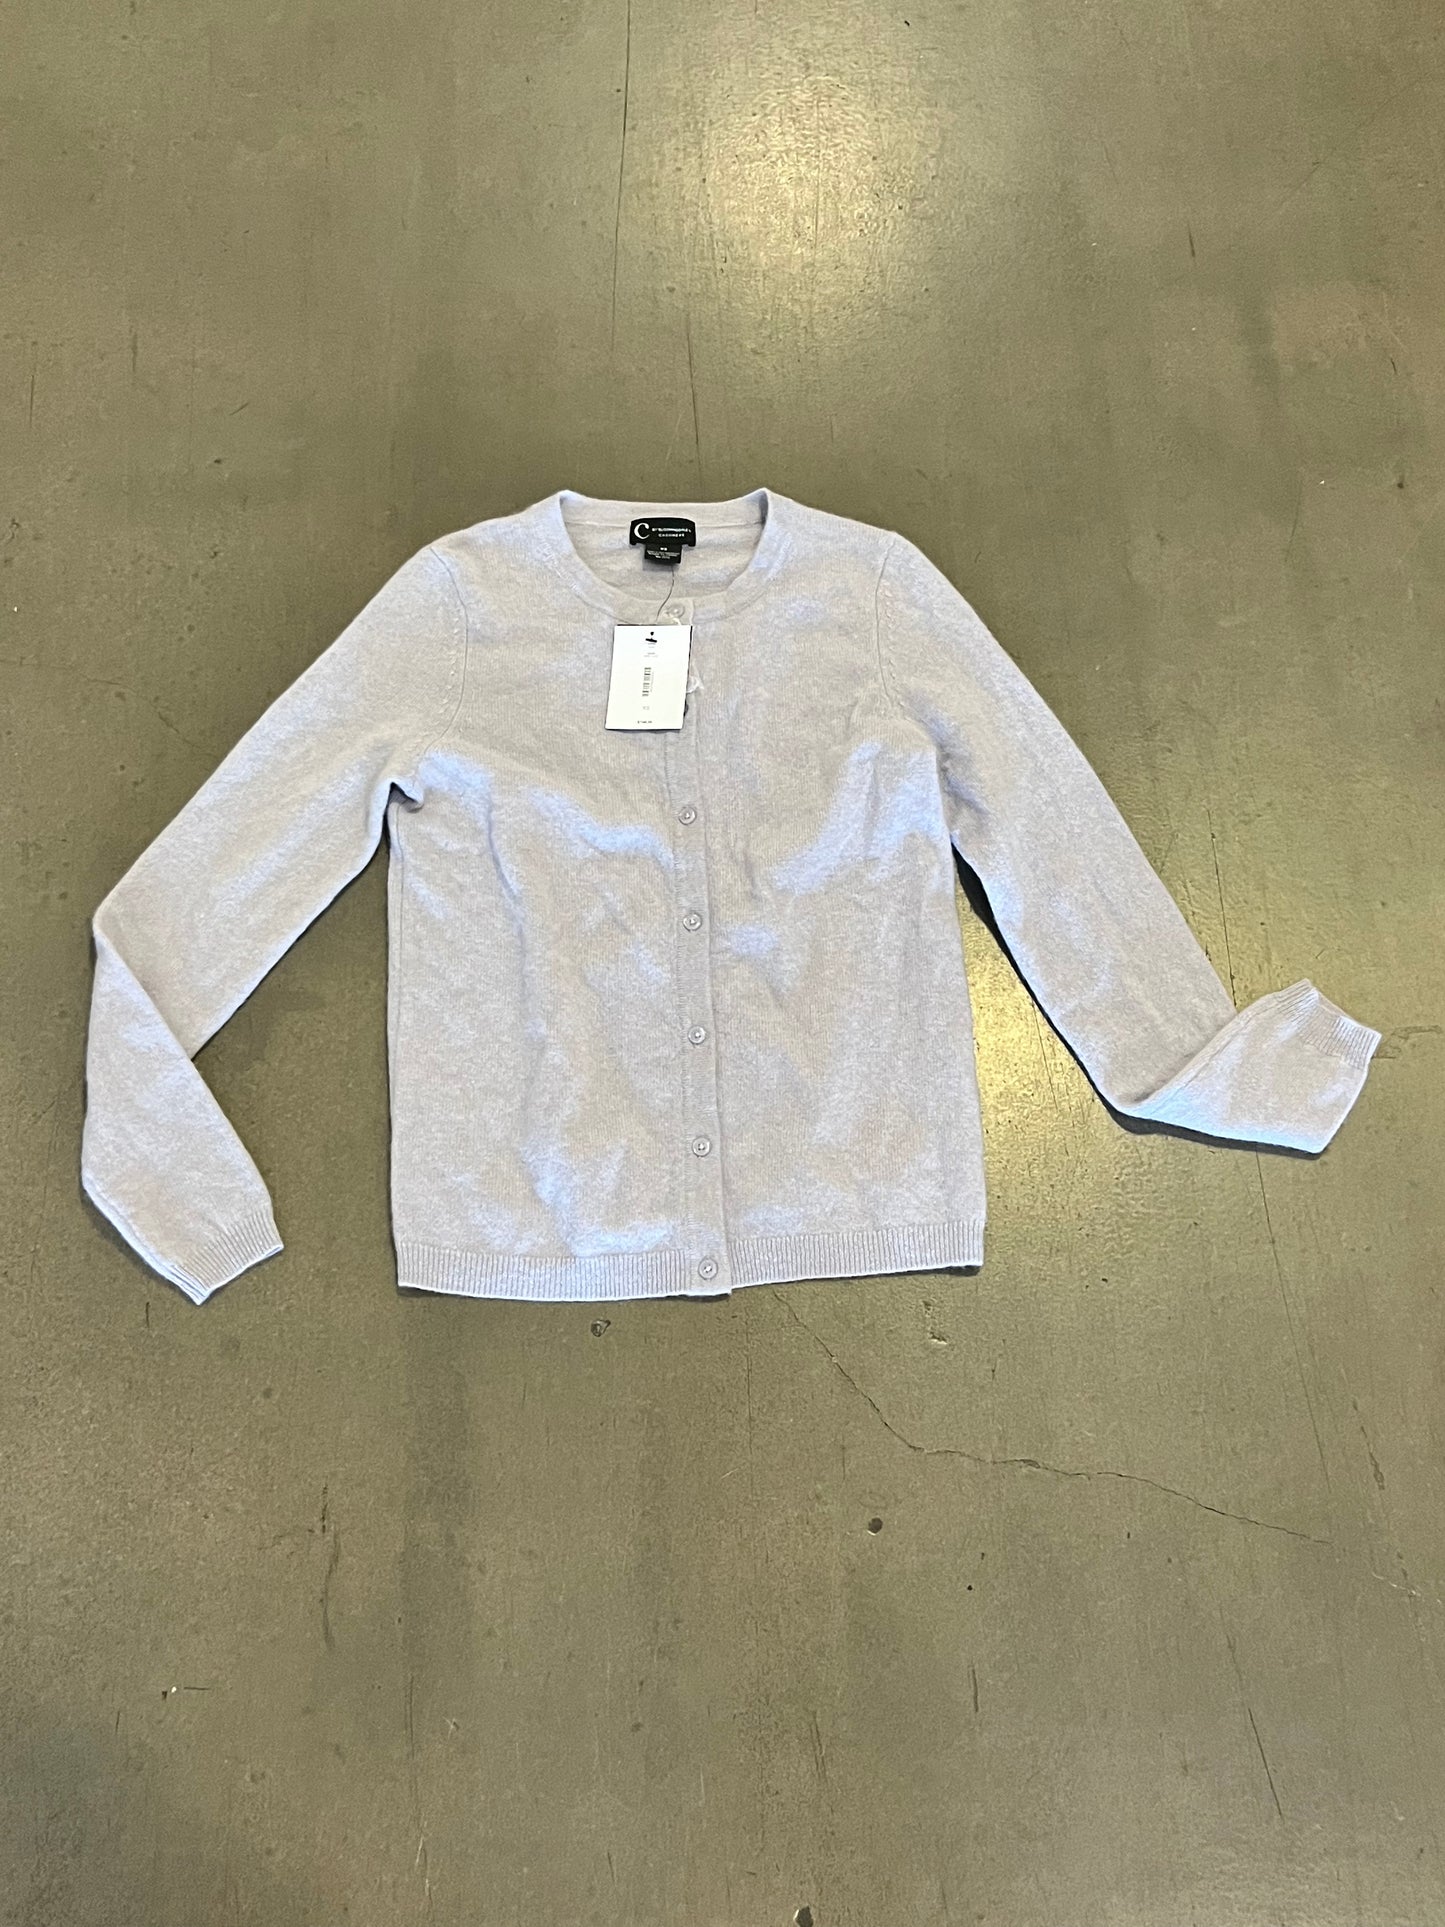 GRIMM: Adalind’s HERO Cashmere Cardigan Sweater (XS)